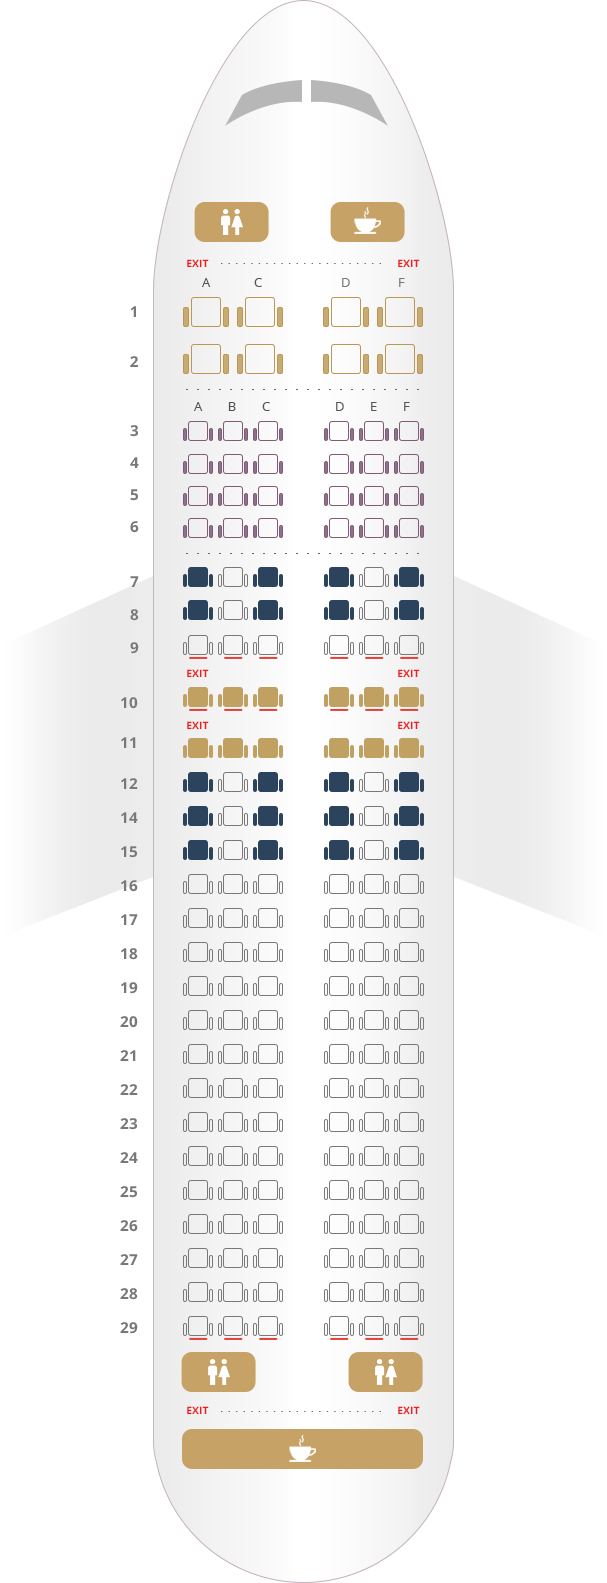 Vistara Seat Map Details and Aircraft Information Seating Plan